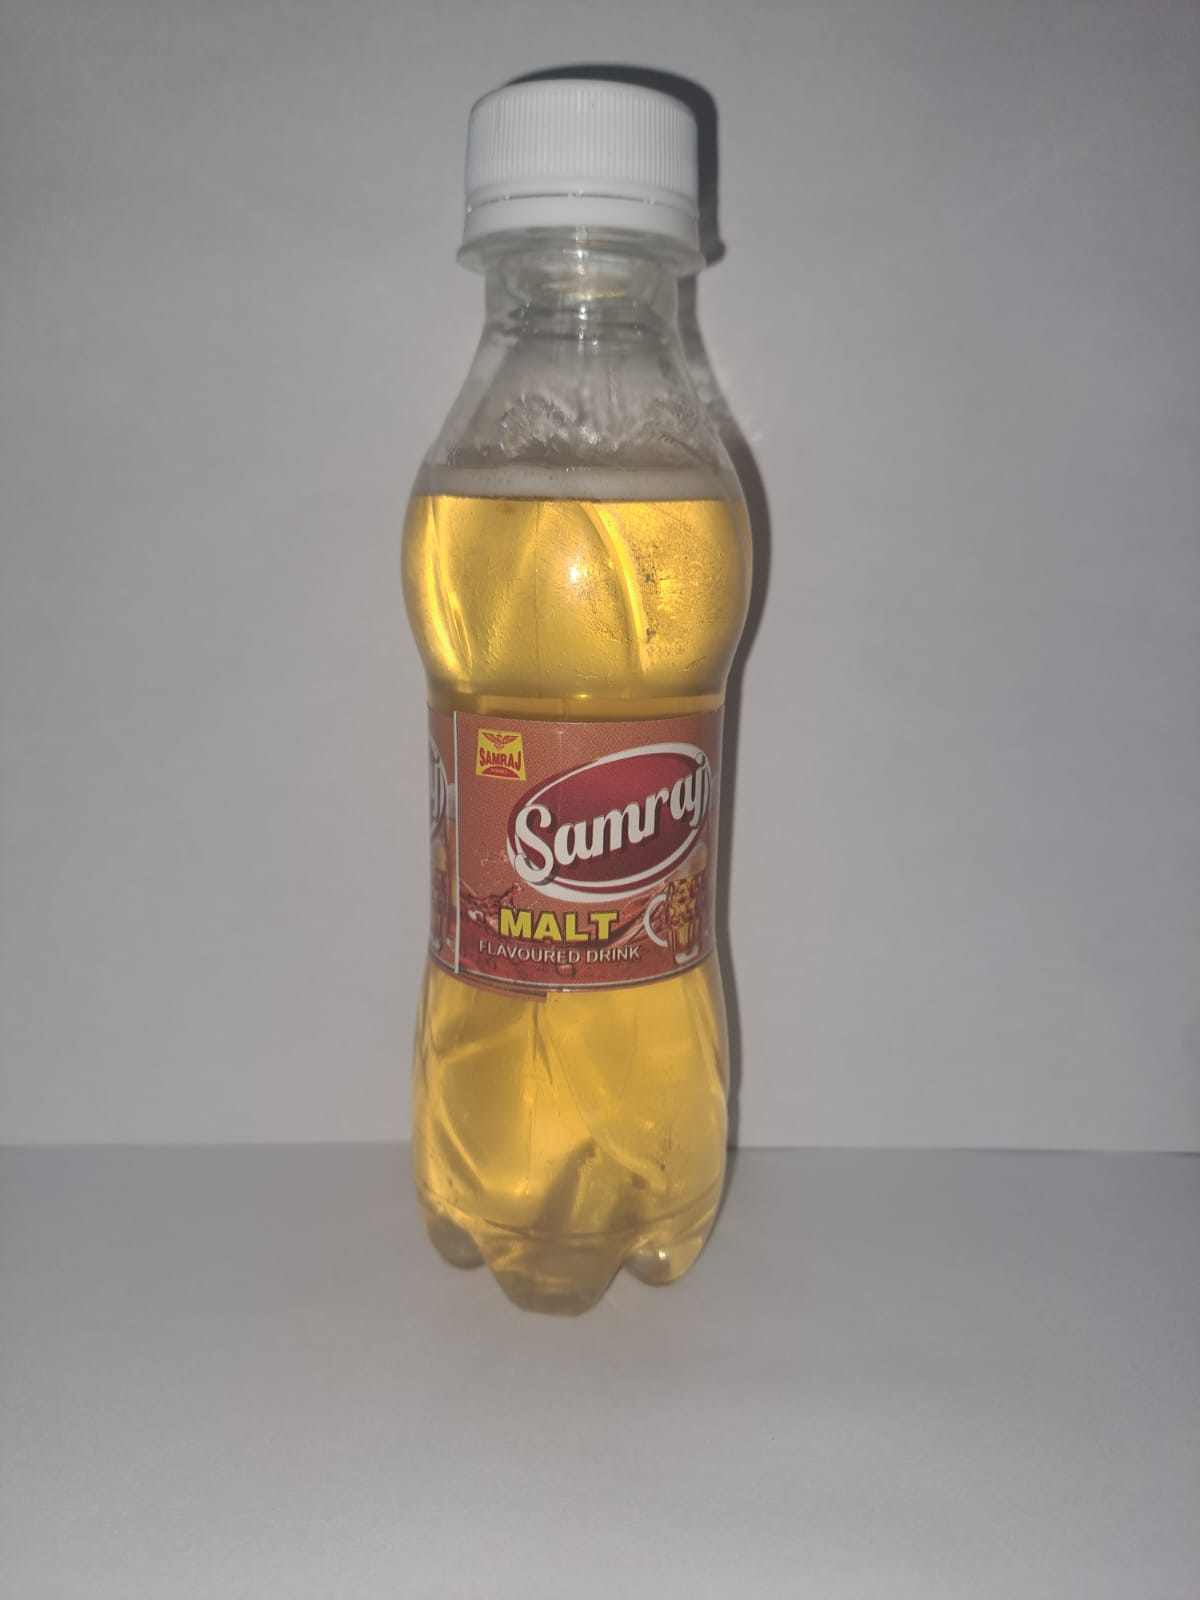 Samraj Malt Flavoured Drink